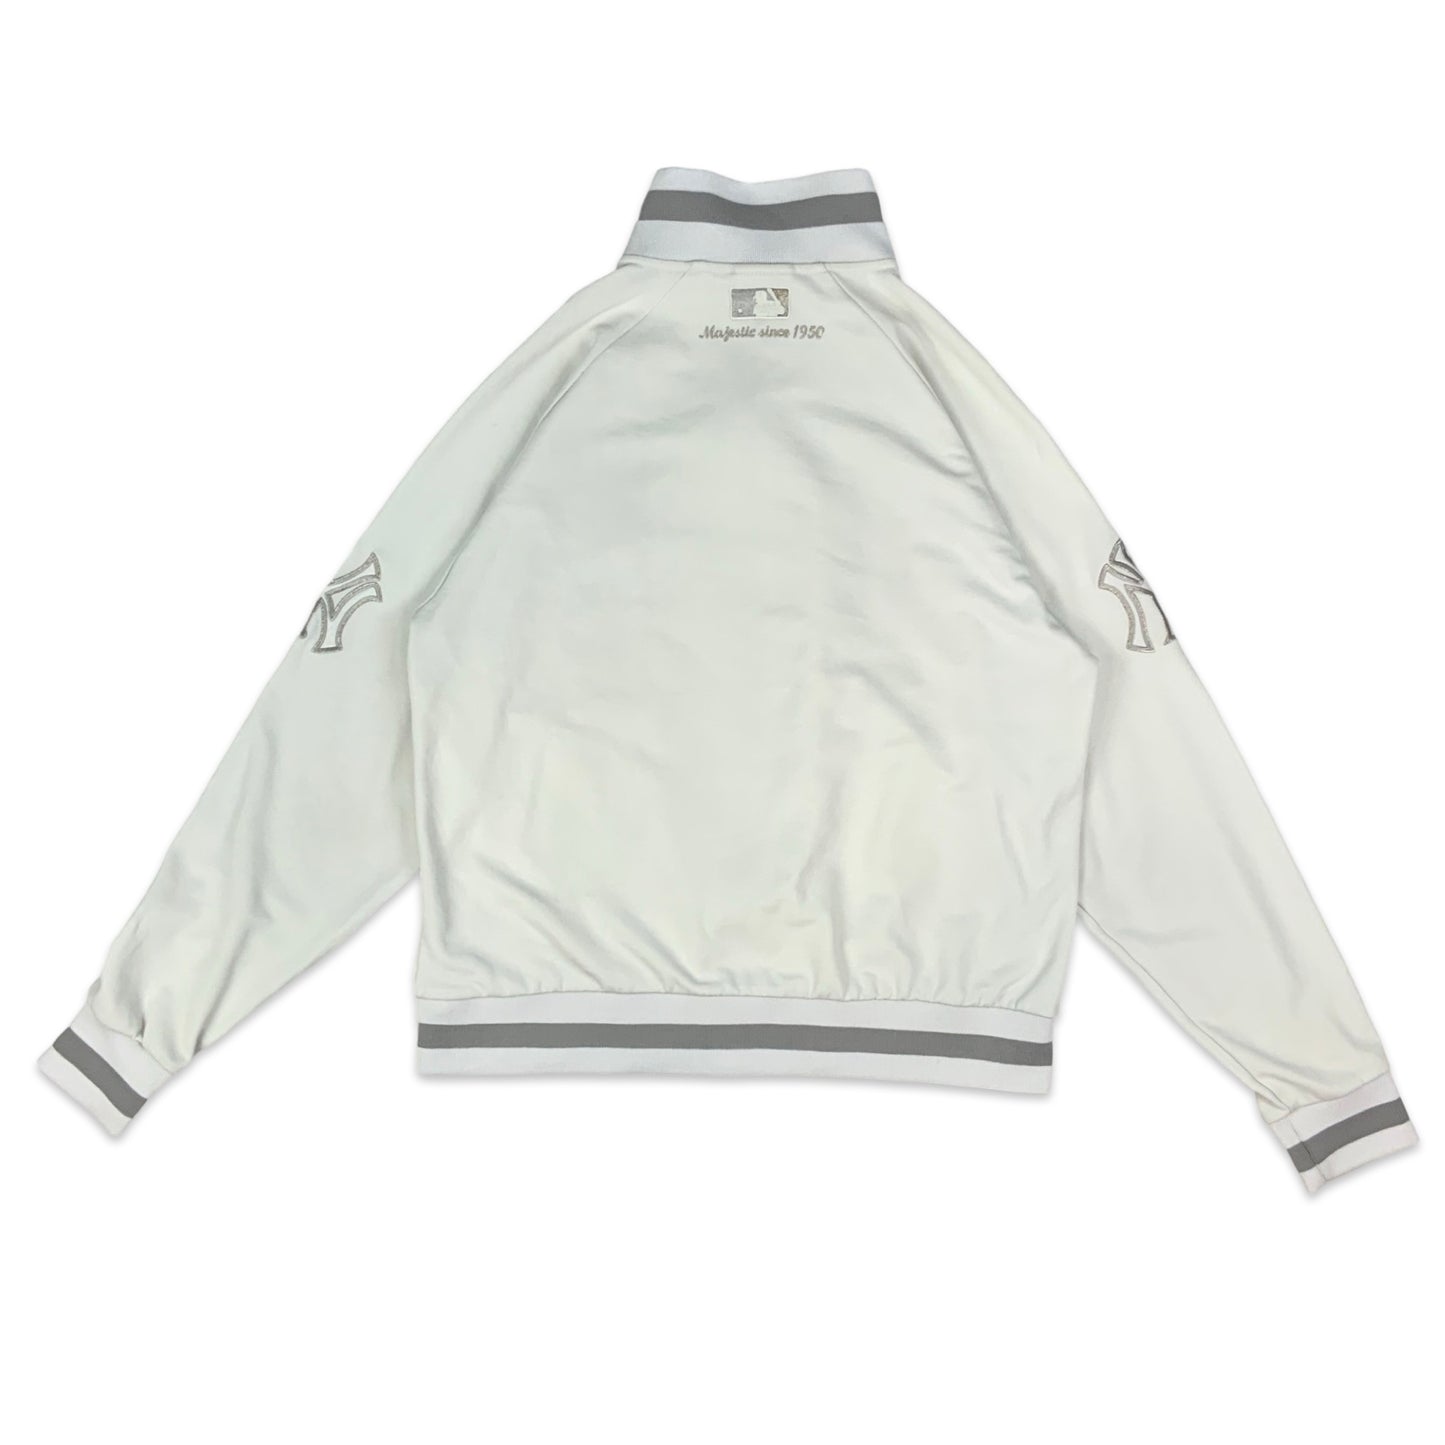 90s White & Silver Yankees Jacket M L